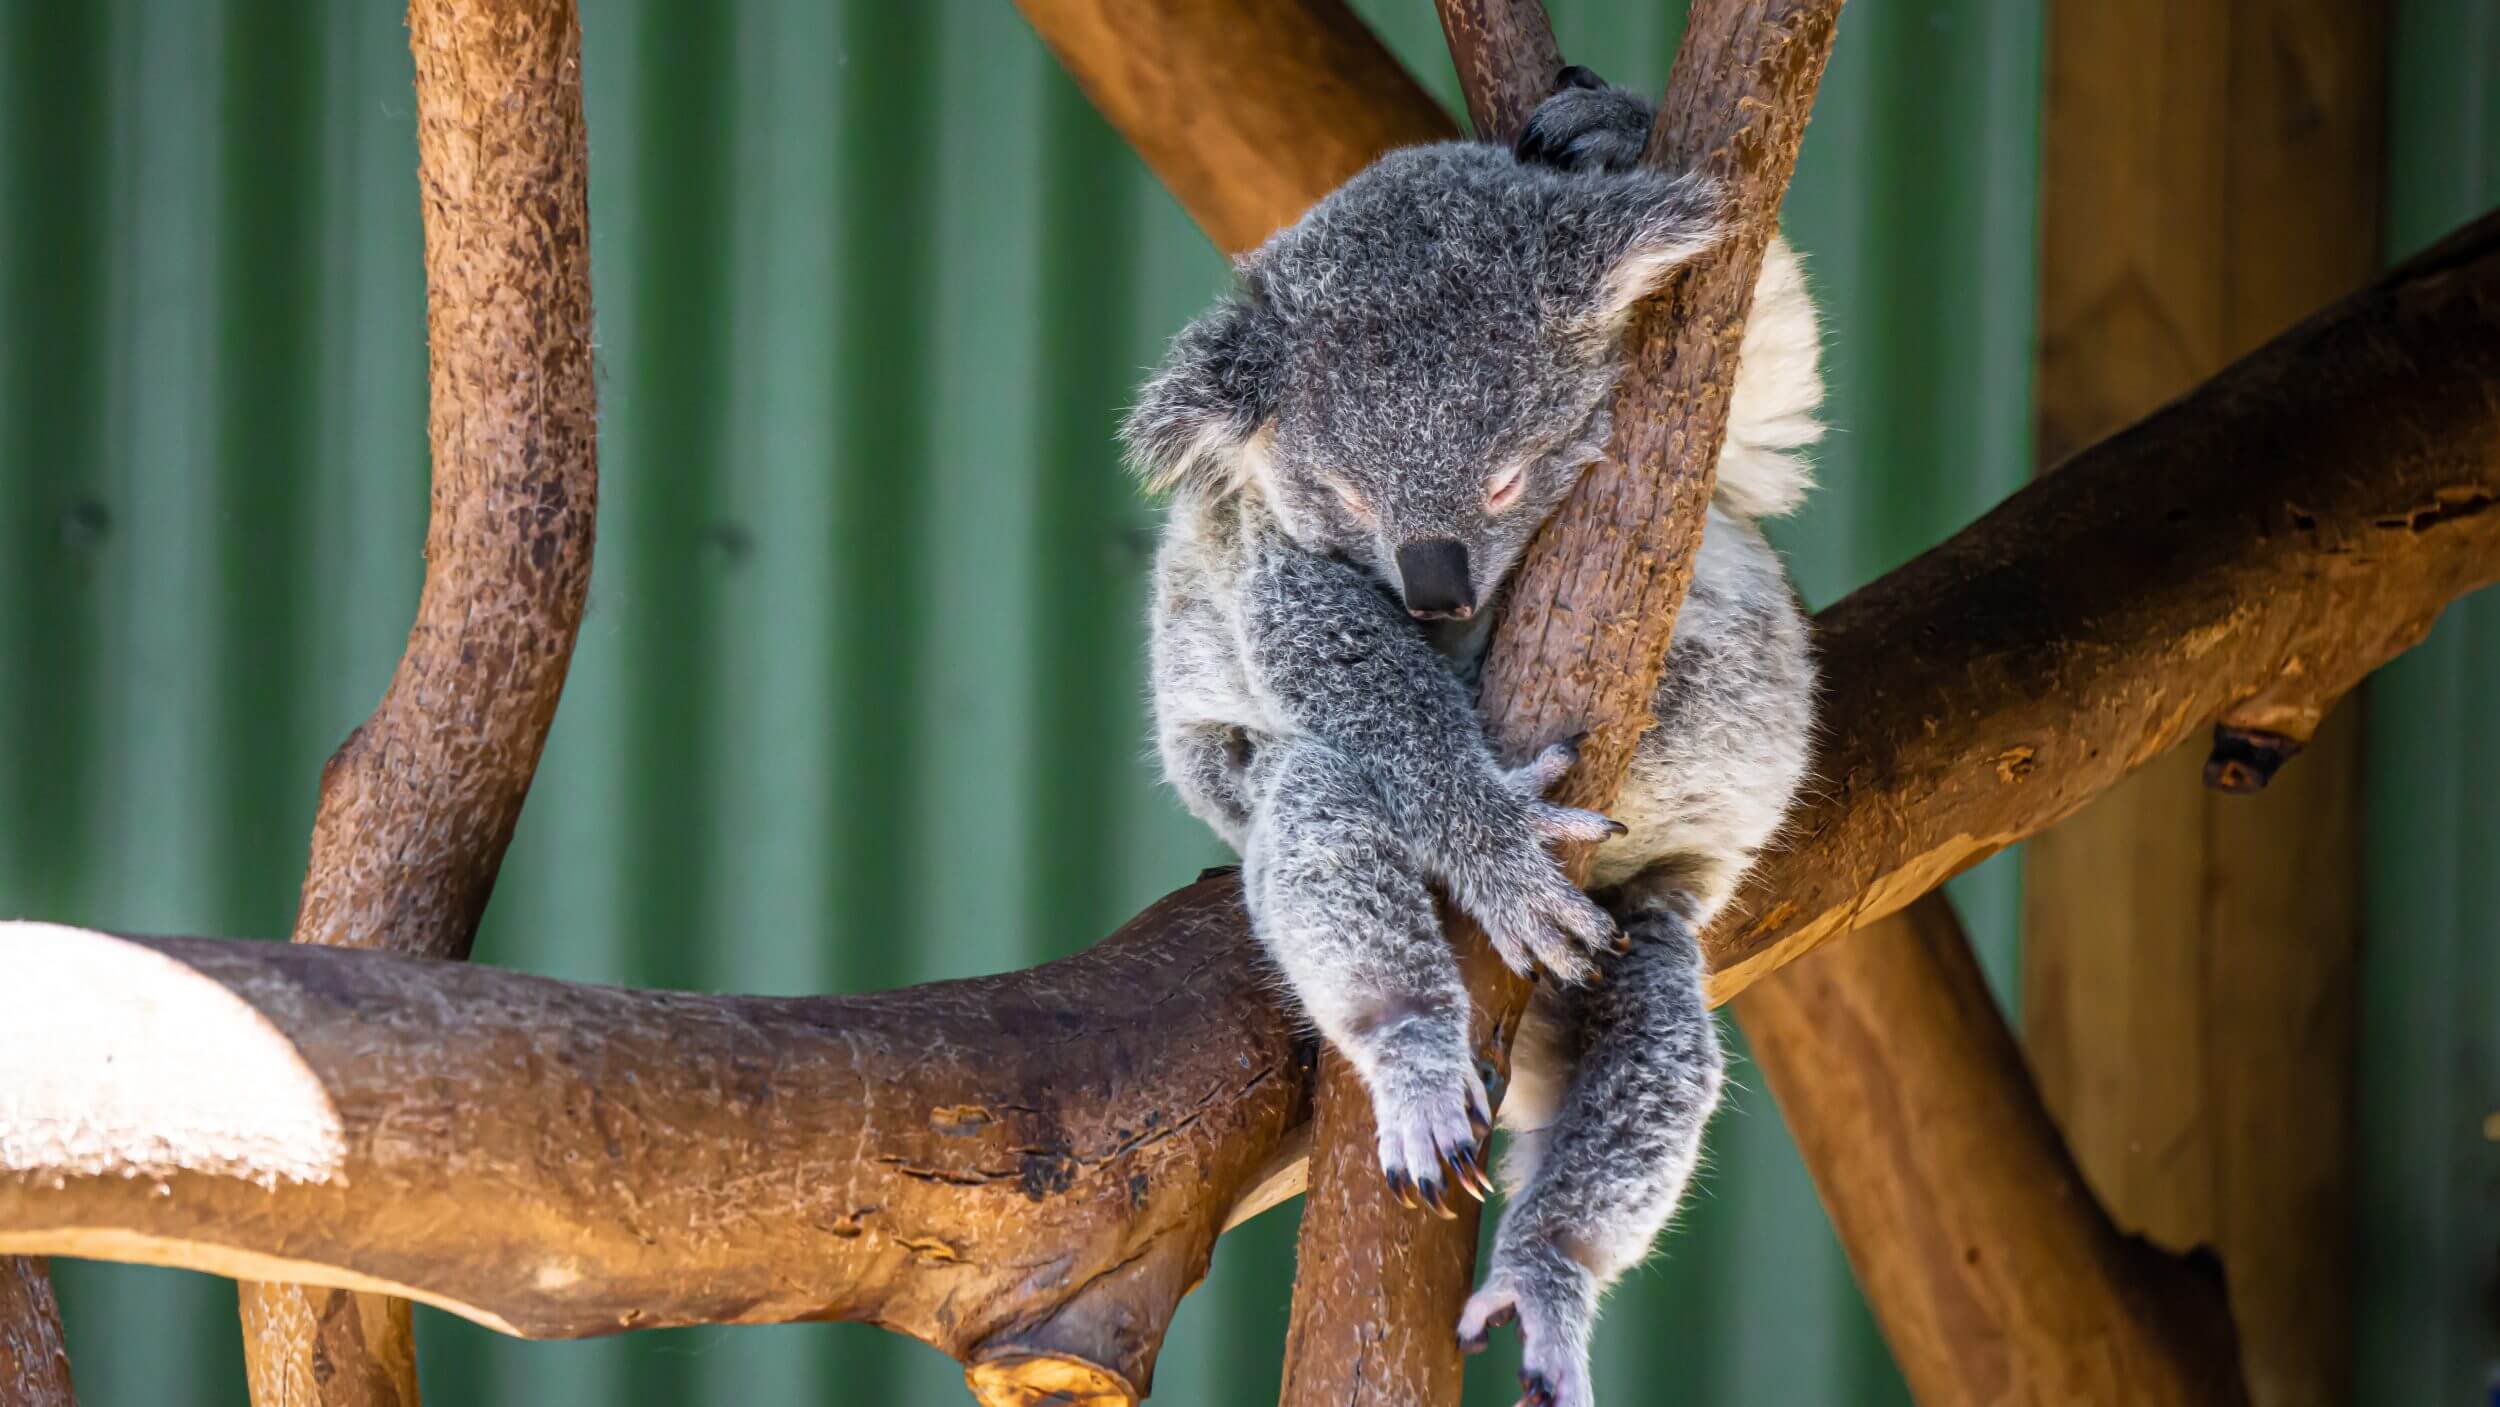 Help save our home! Endangered Koalas need help.